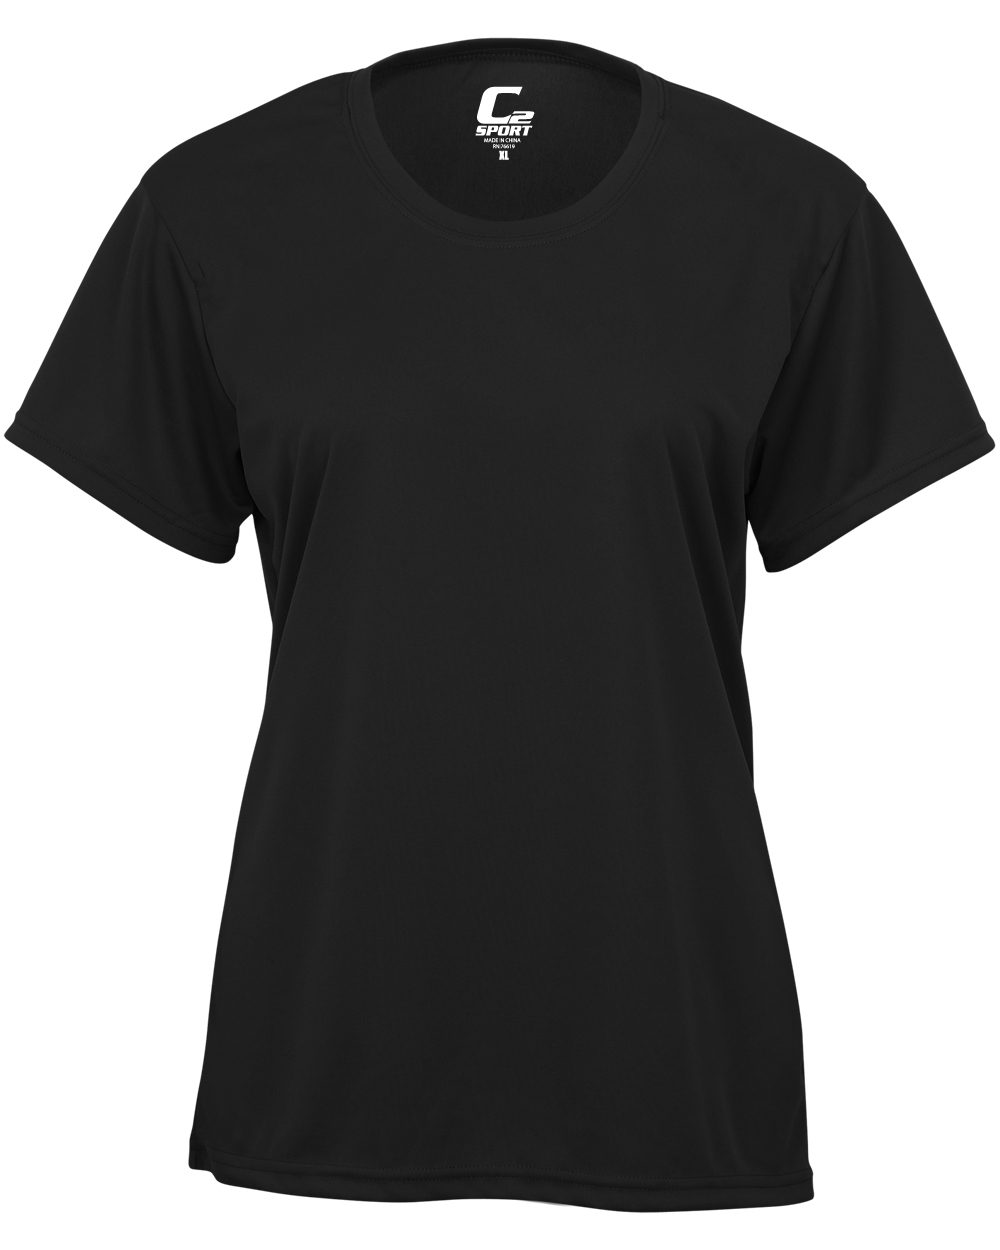 C2 Sport 5600 - Ladies' Short Sleeve Performance T-Shirt